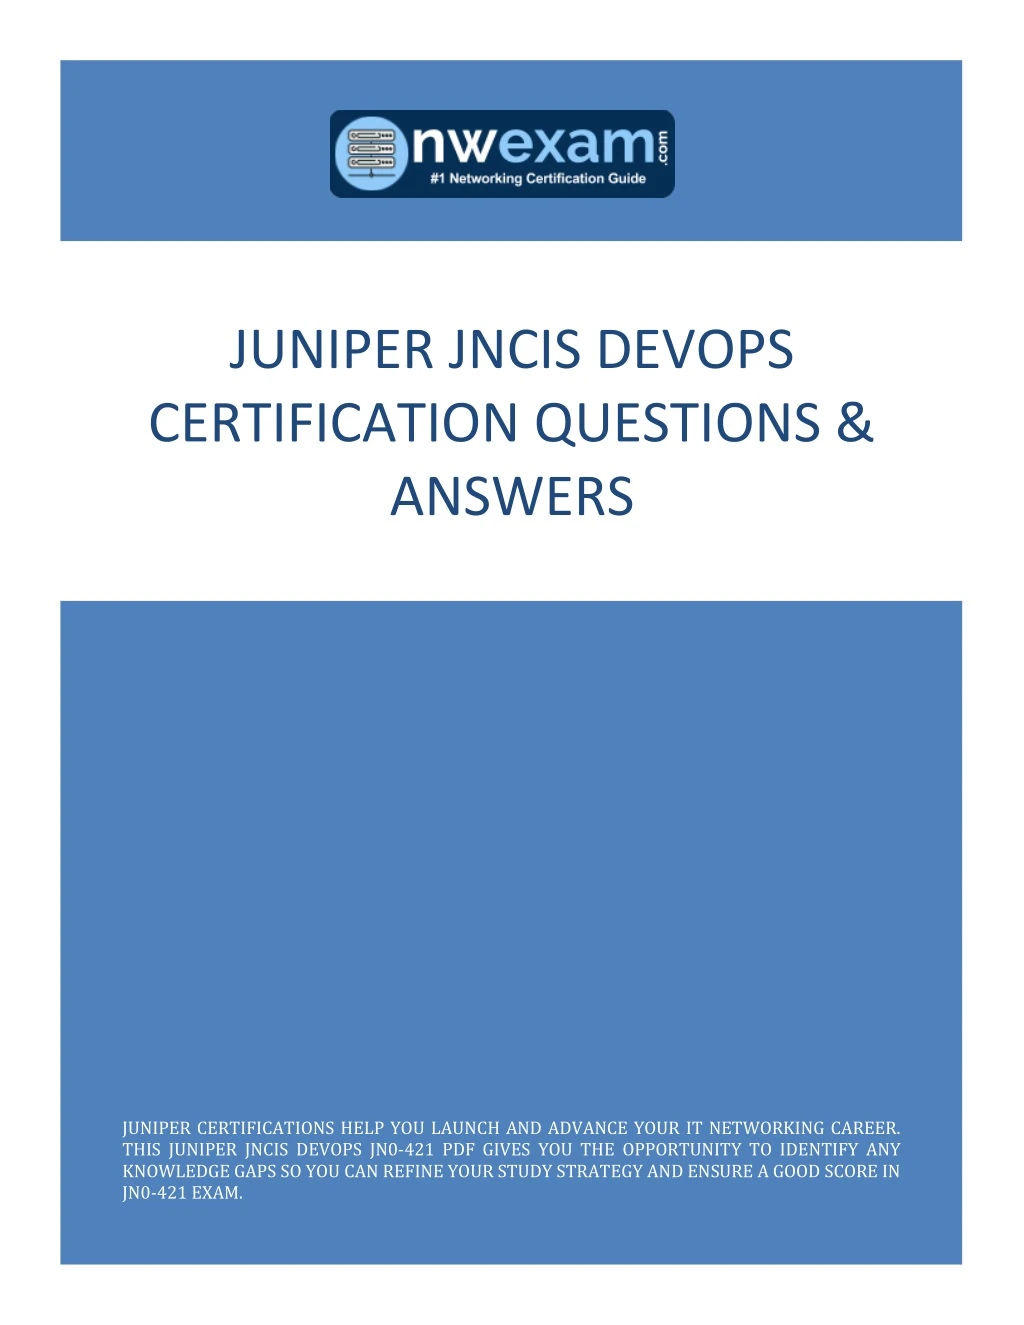 juniper jncis devops certification questions